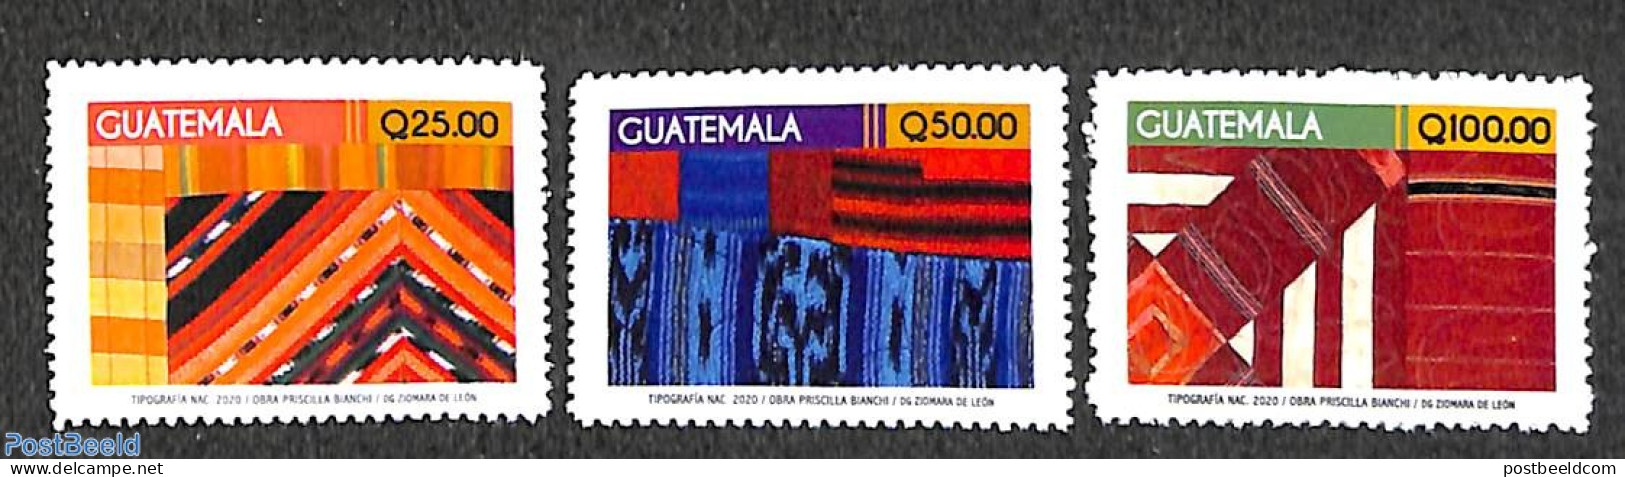 Guatemala 2020 Definitives 3v, Mint NH, Various - Textiles - Textile